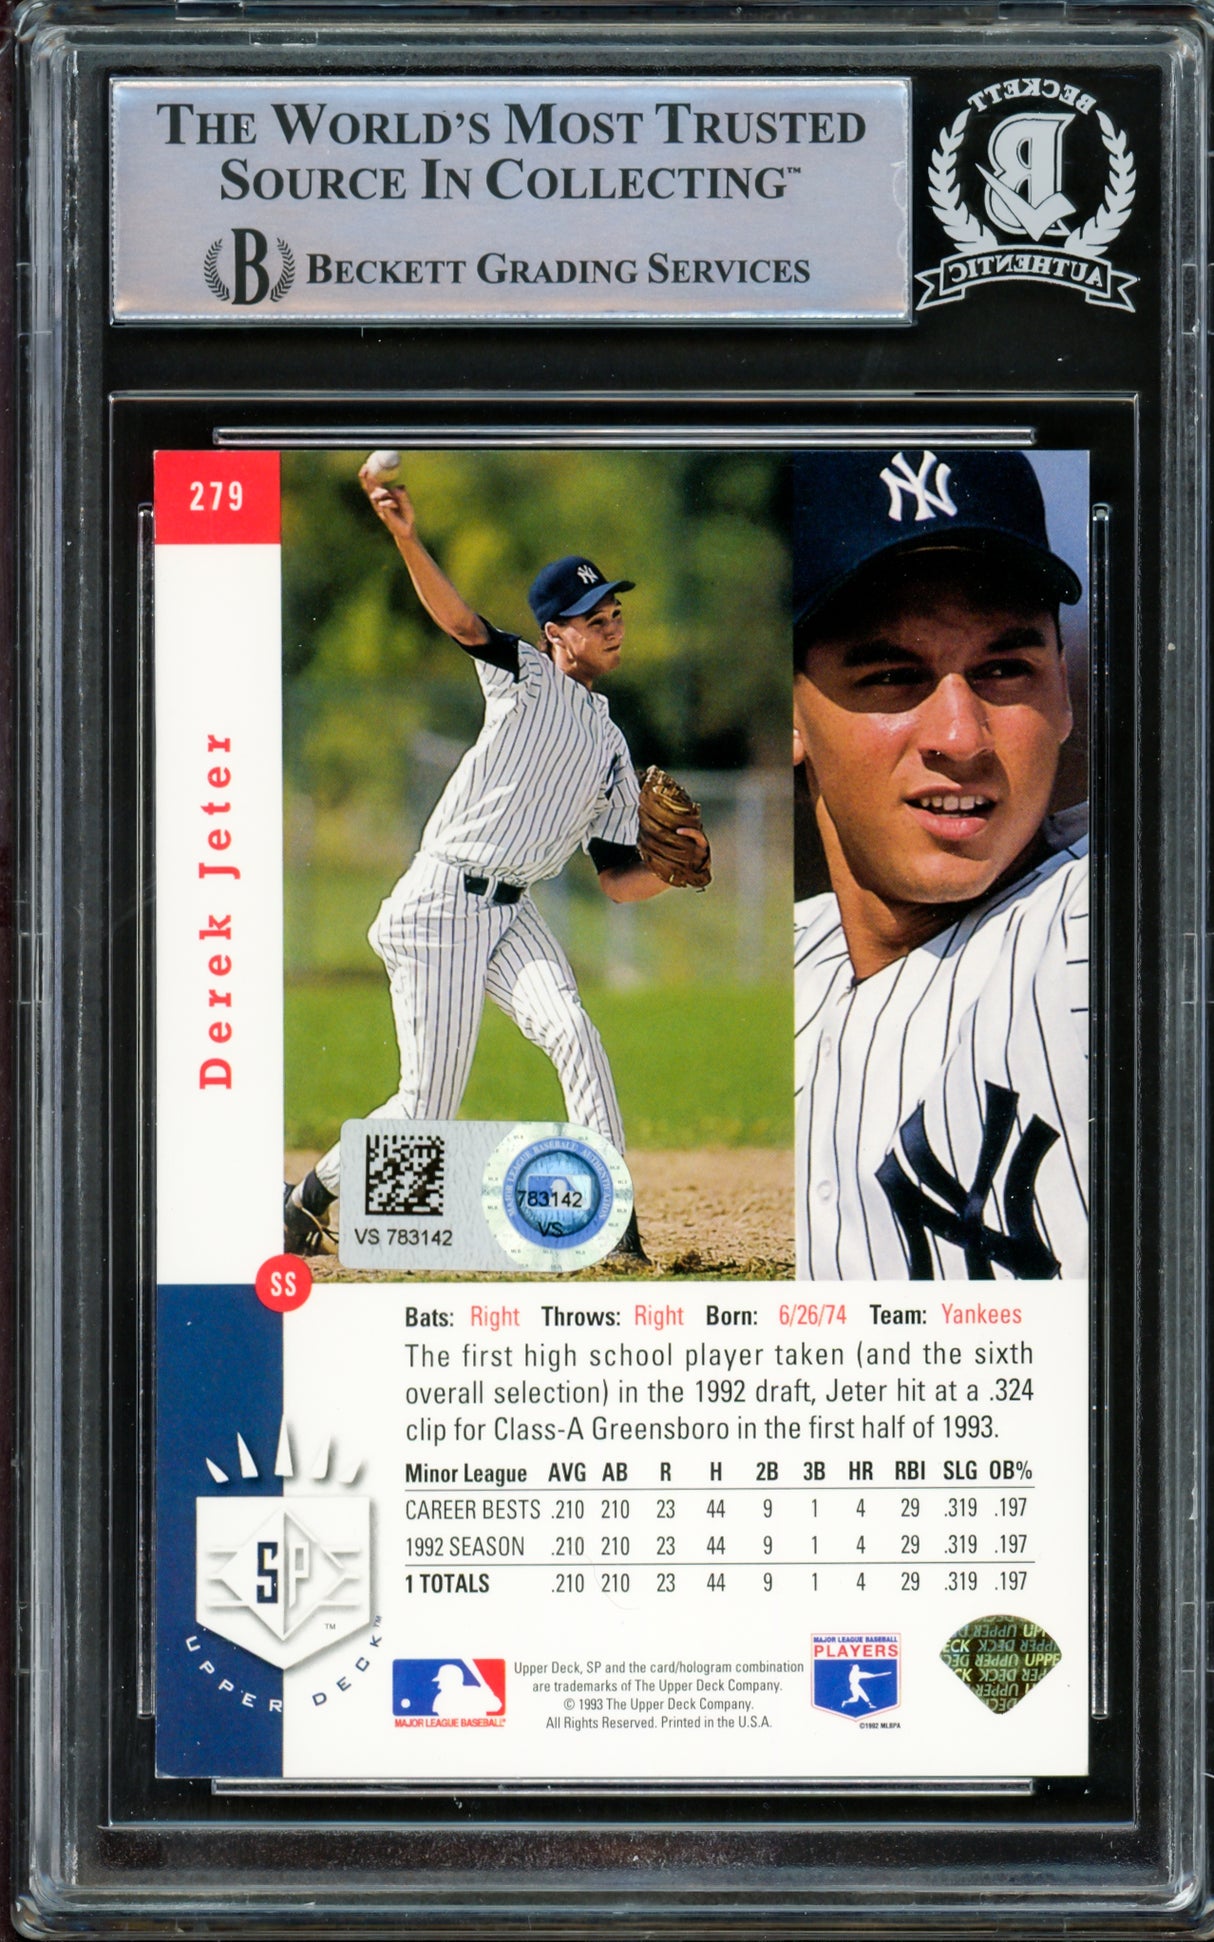 Derek Jeter Autographed 1993 Upper Deck SP Card #279 New York Yankees "The Captain" MLB Holo & Beckett BAS #14612502